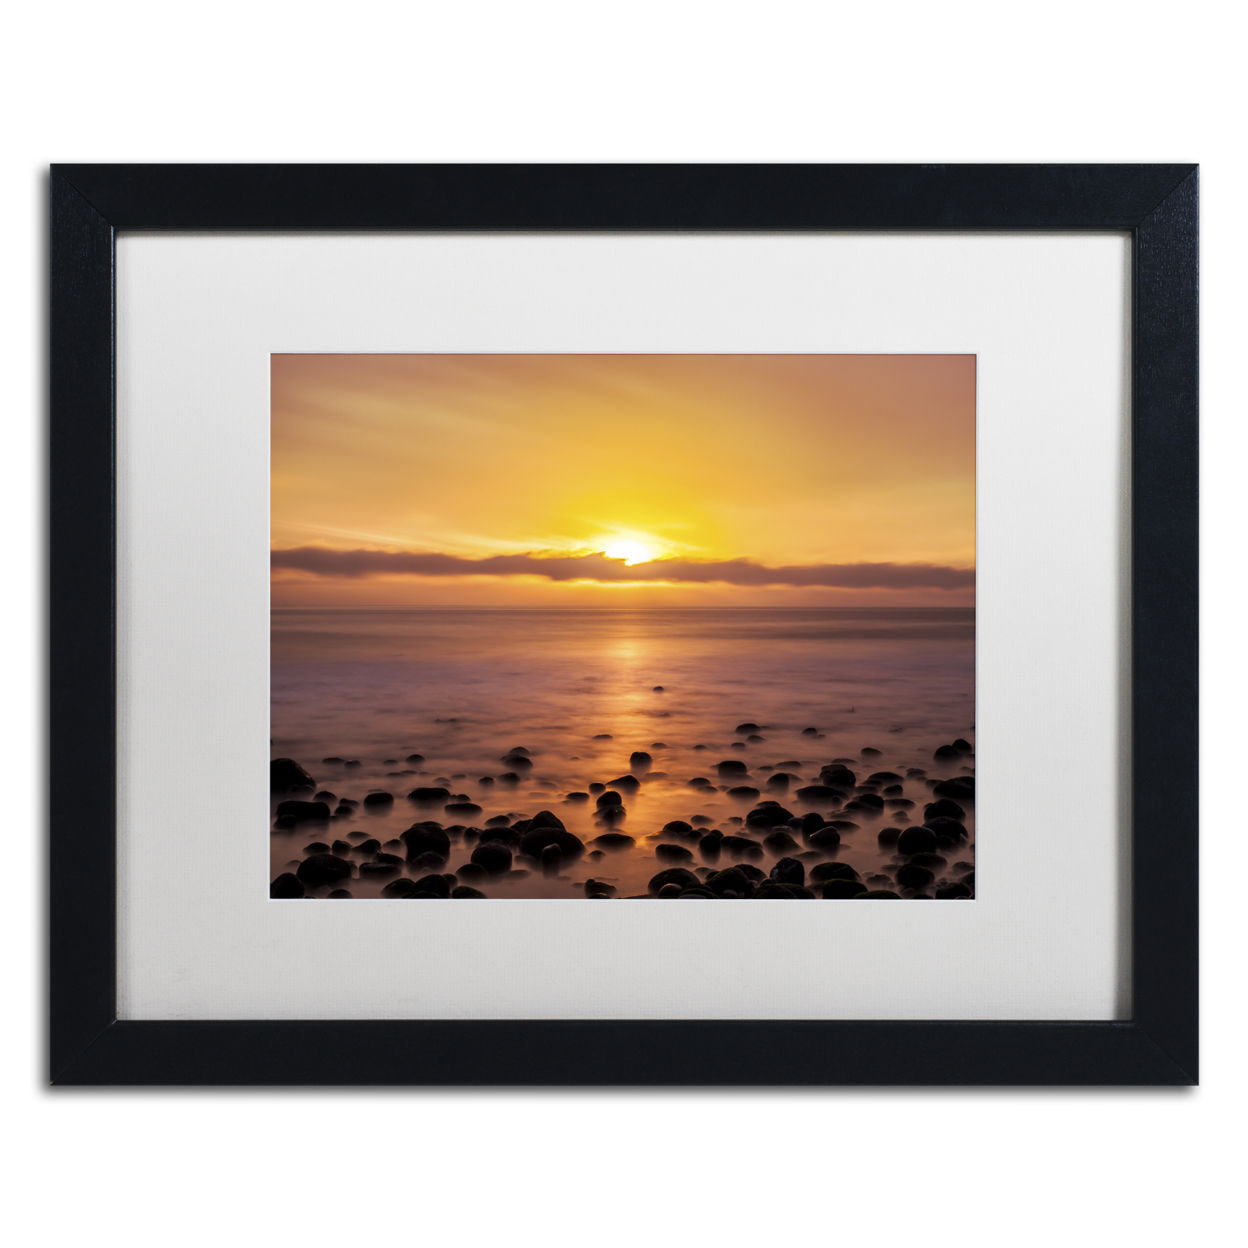 Chris Moyer 'Pacific Sunset' Black Wooden Framed Art 18 X 22 Inches